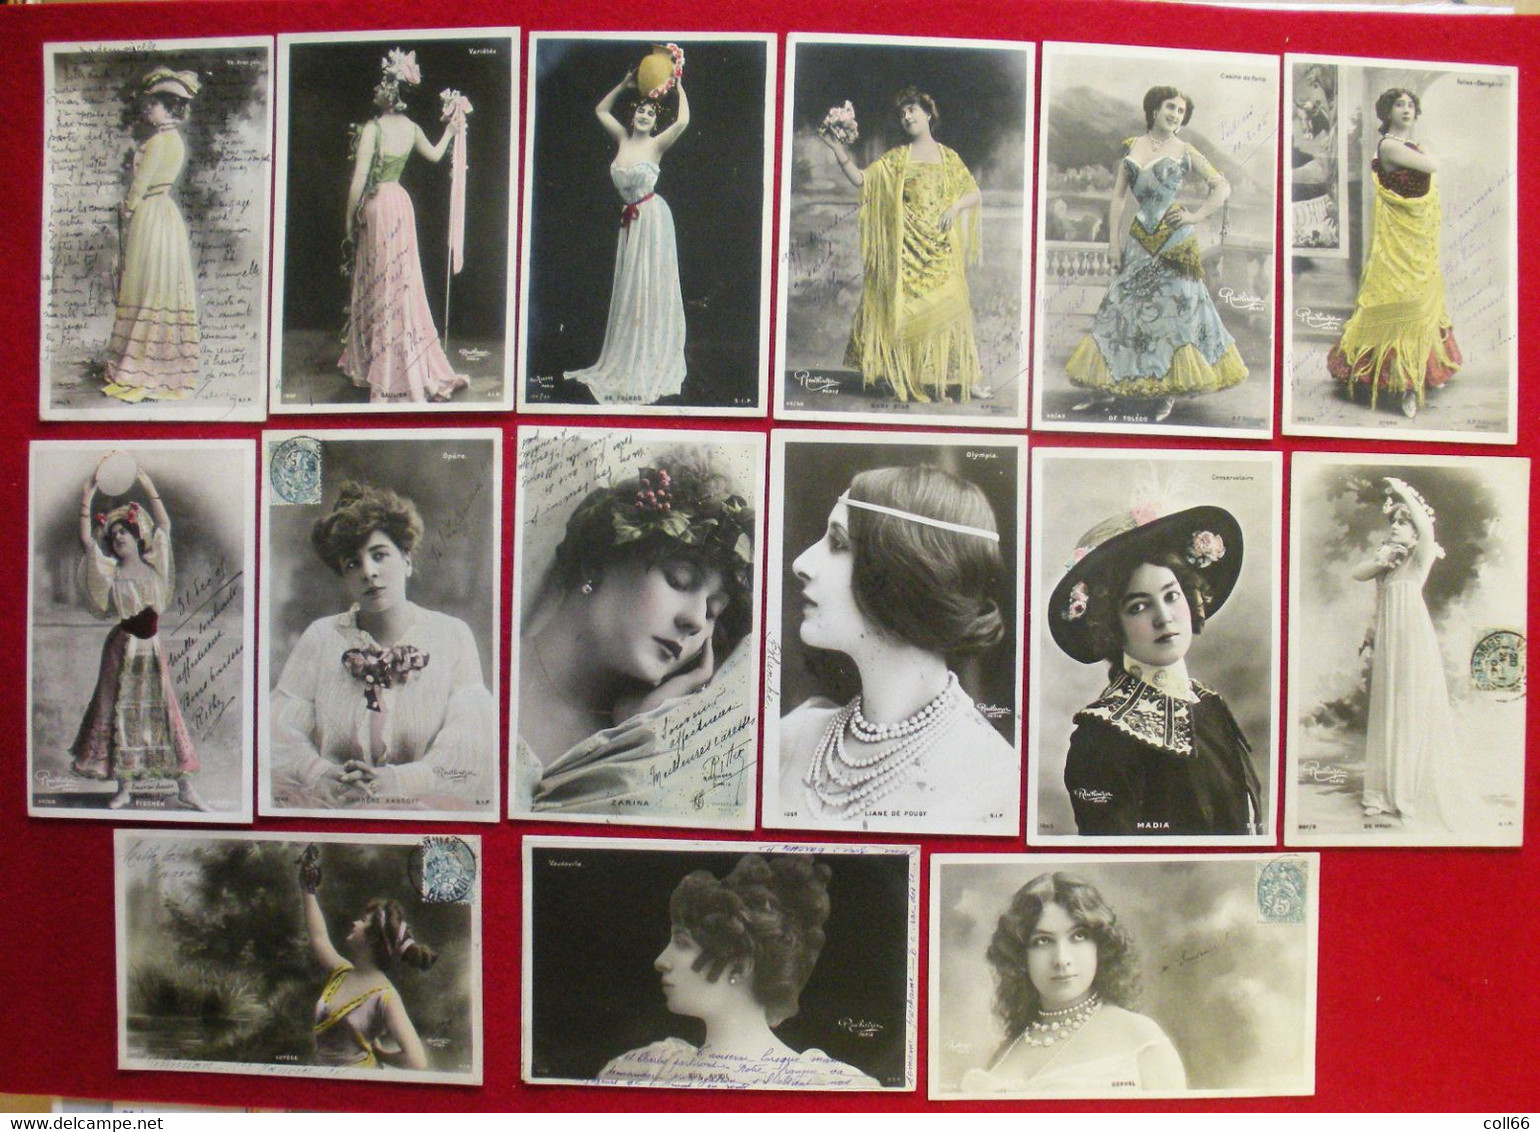 Lot 136 cartes postales 1904-1909 artistes et vedettes même famille Larose éditeur Reutlinger Paris Franco port/Europe